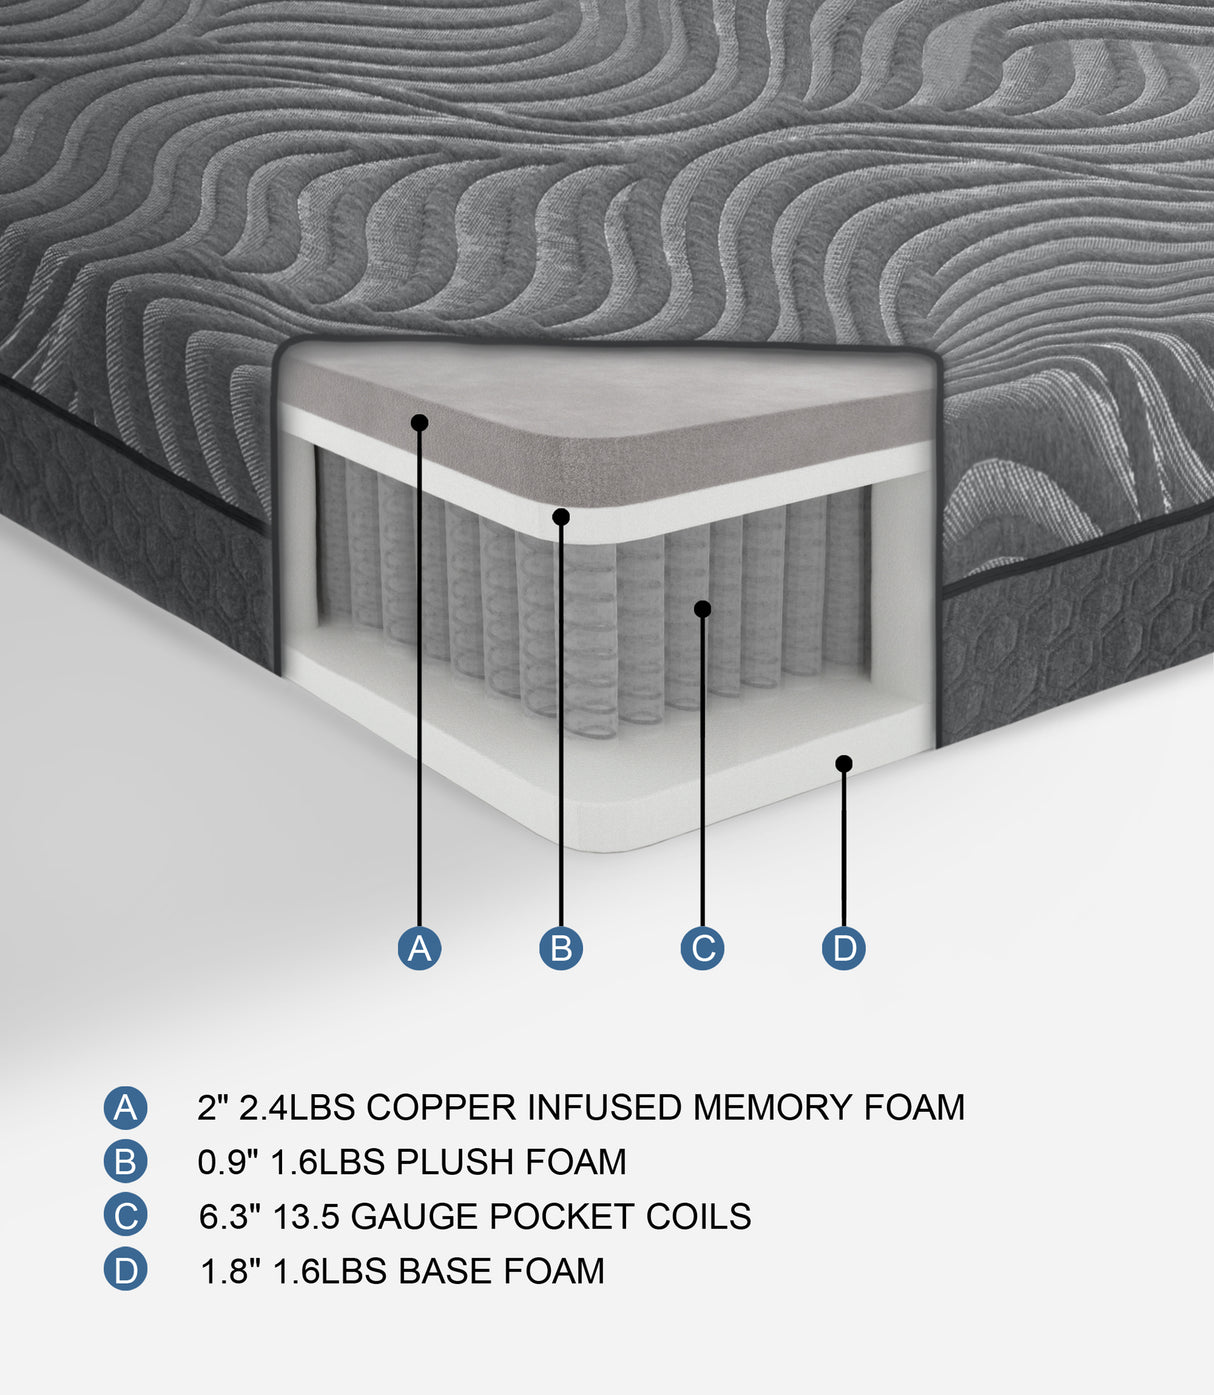 Taurus 11" Copper-Infused Memory Foam Hybrid Mattress Display Cube